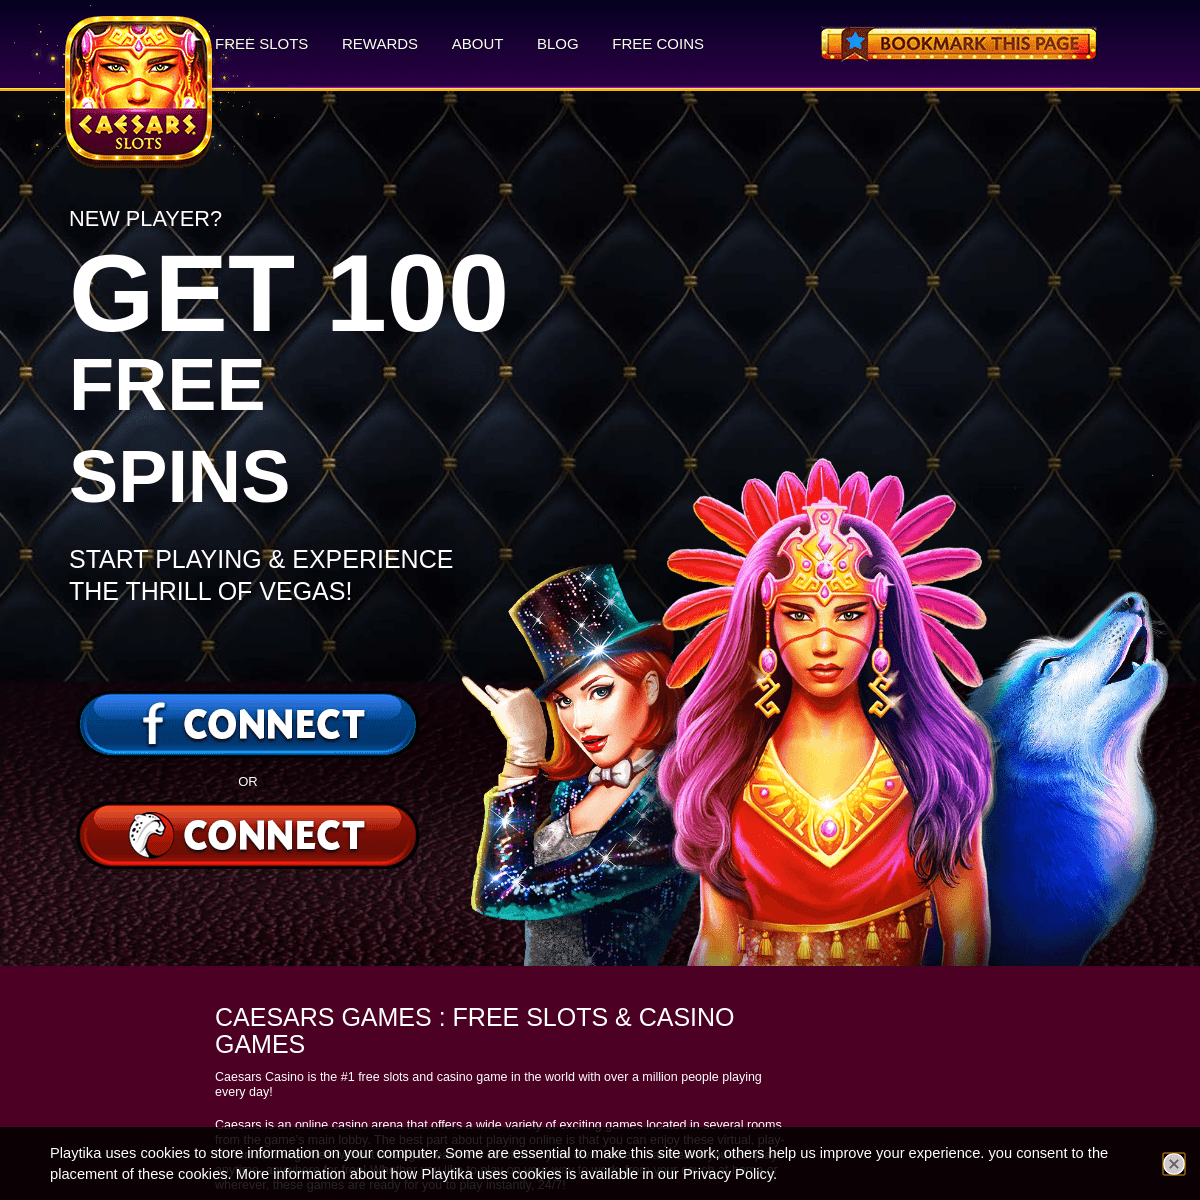 caesars games free slots casino